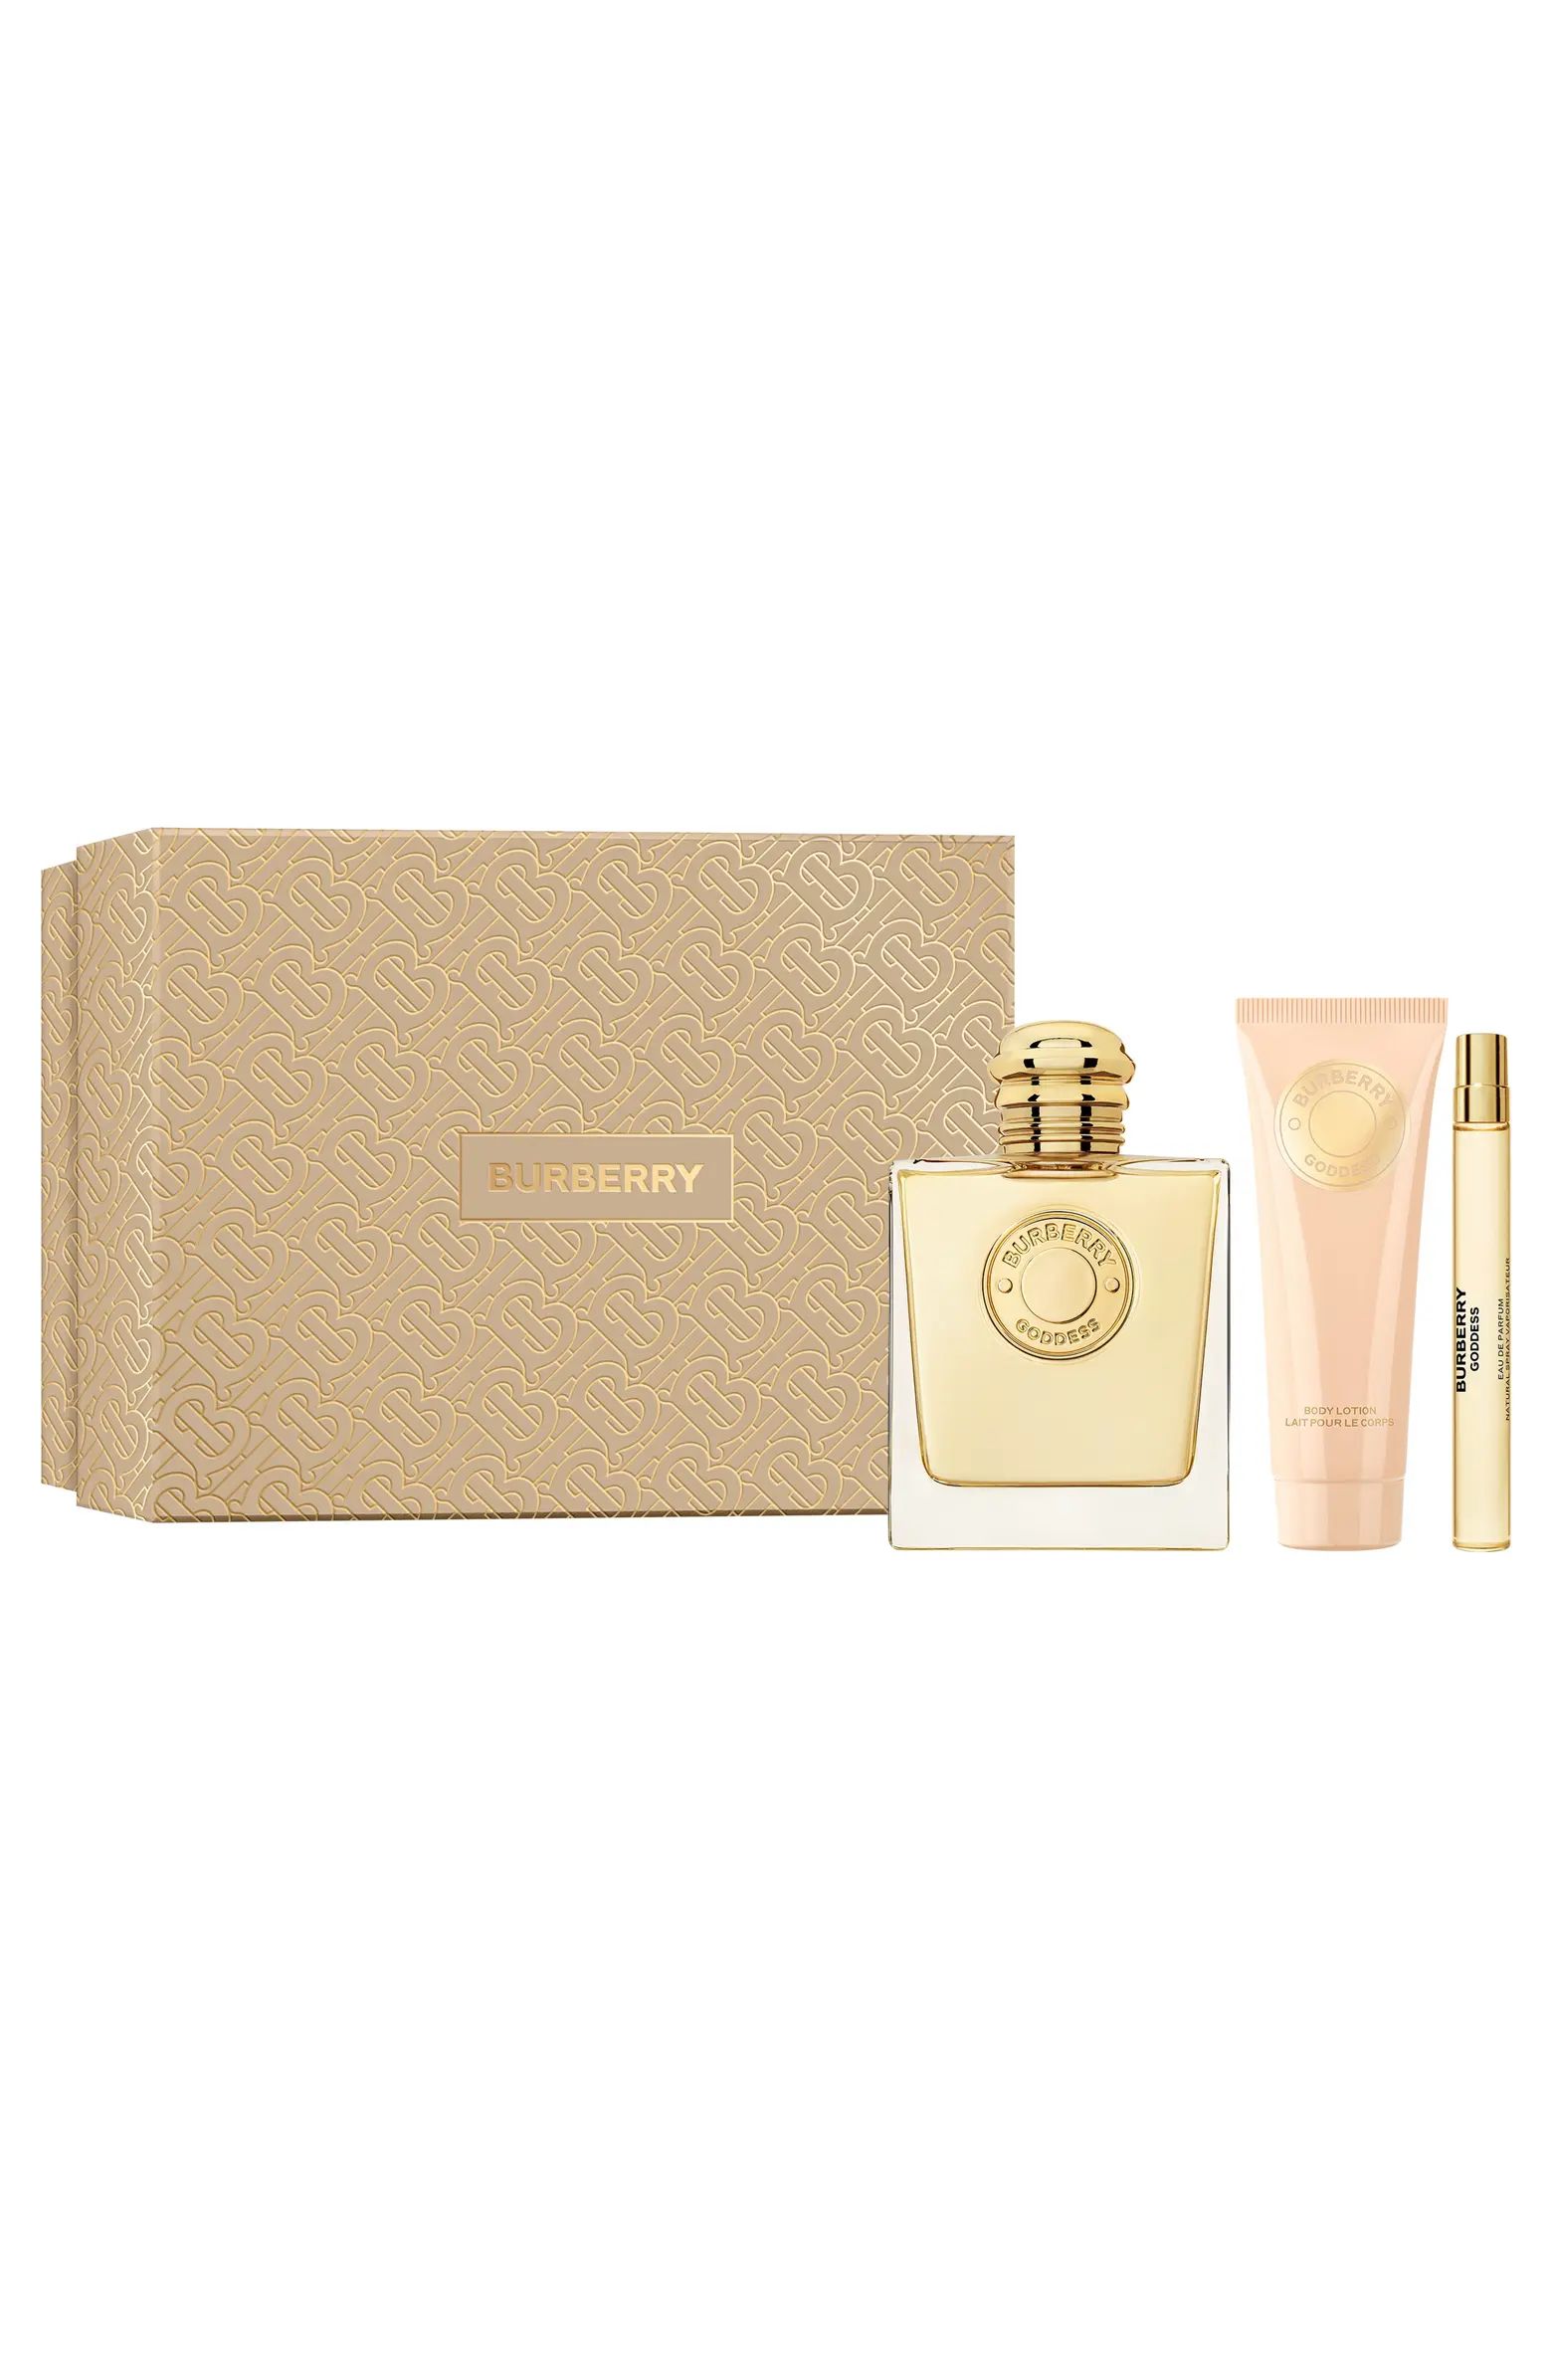 Goddess Eau de Parfum Gift Set $230 Value | Nordstrom